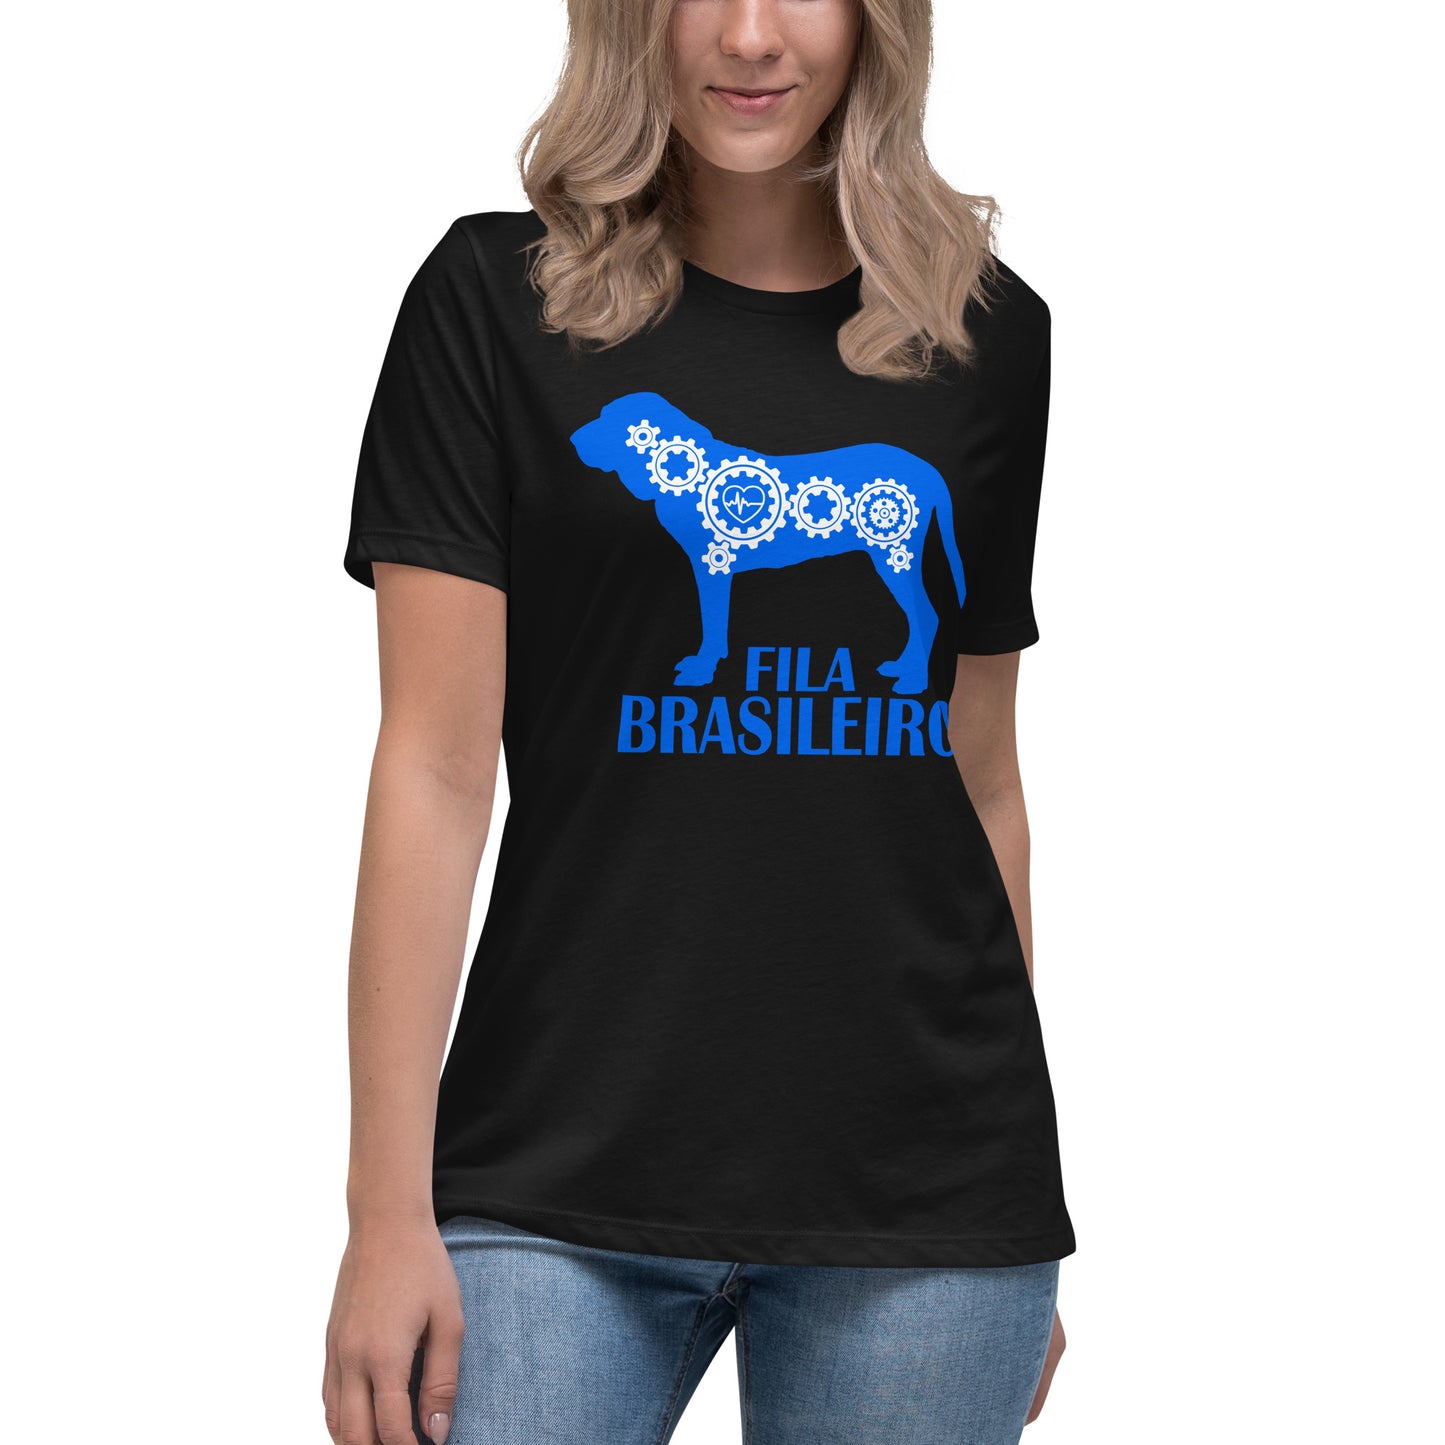 Fila Brasileiro Bionic women’s black t-shirt by Dog Artistry.